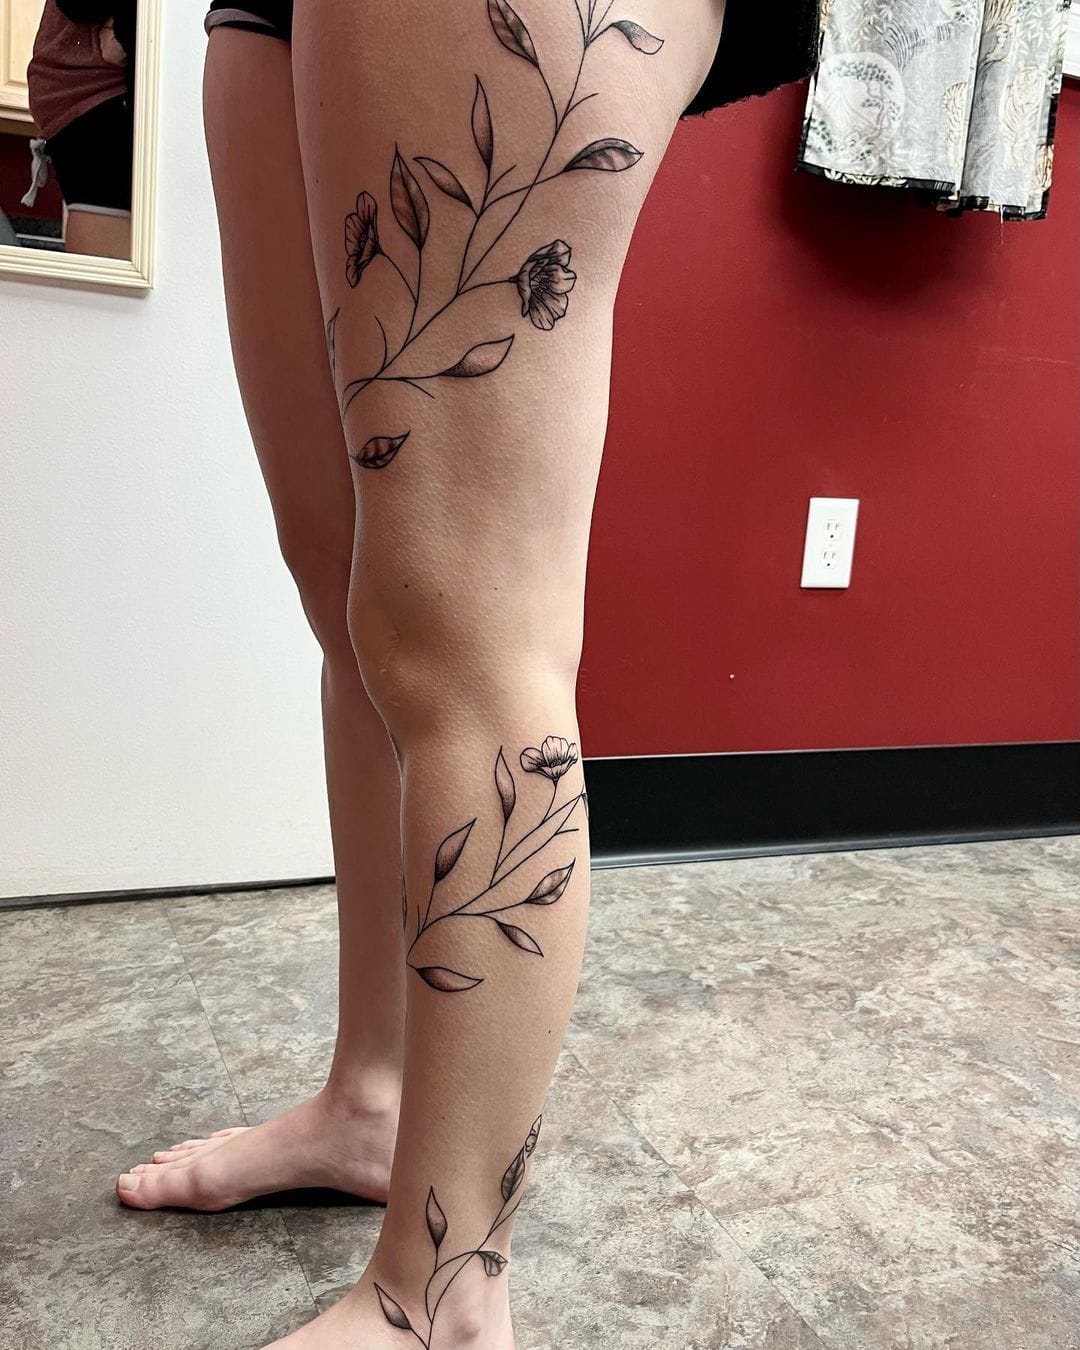 50 Gorgeous Ankle Tattoos for Ink Inspiration | CafeMom.com